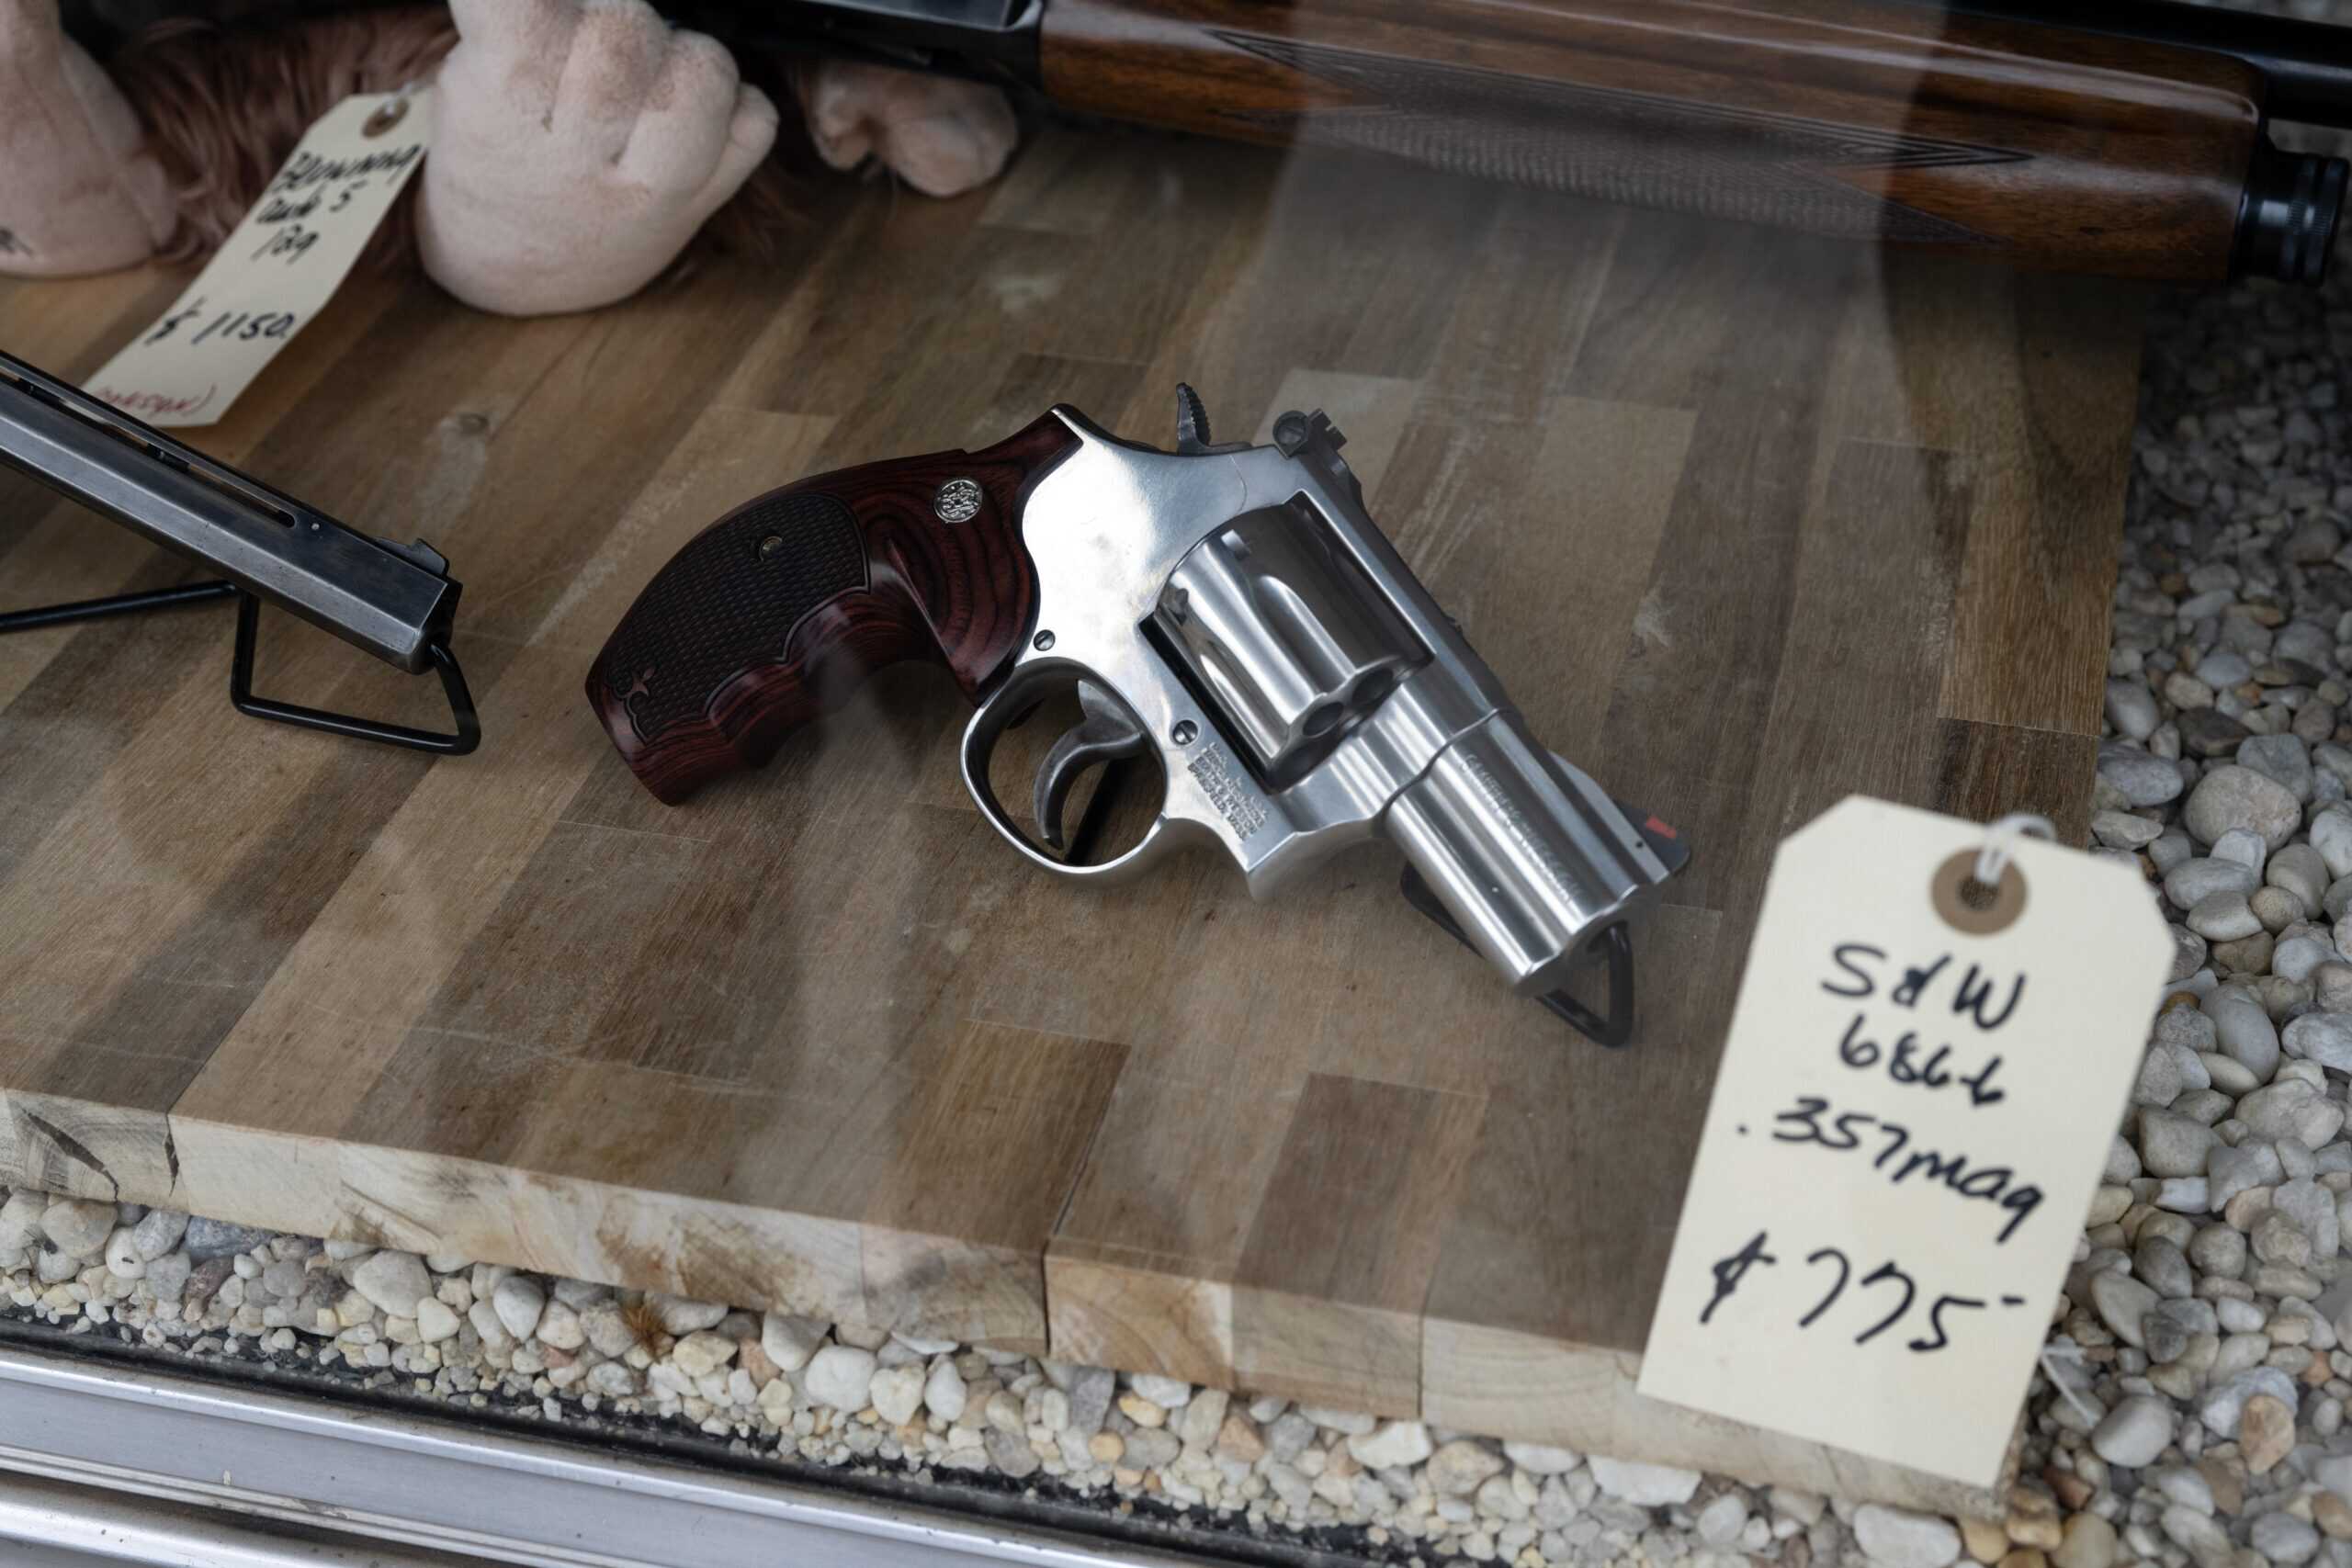 Tennessee gun show gun shop | Pistol for sale in a gun store